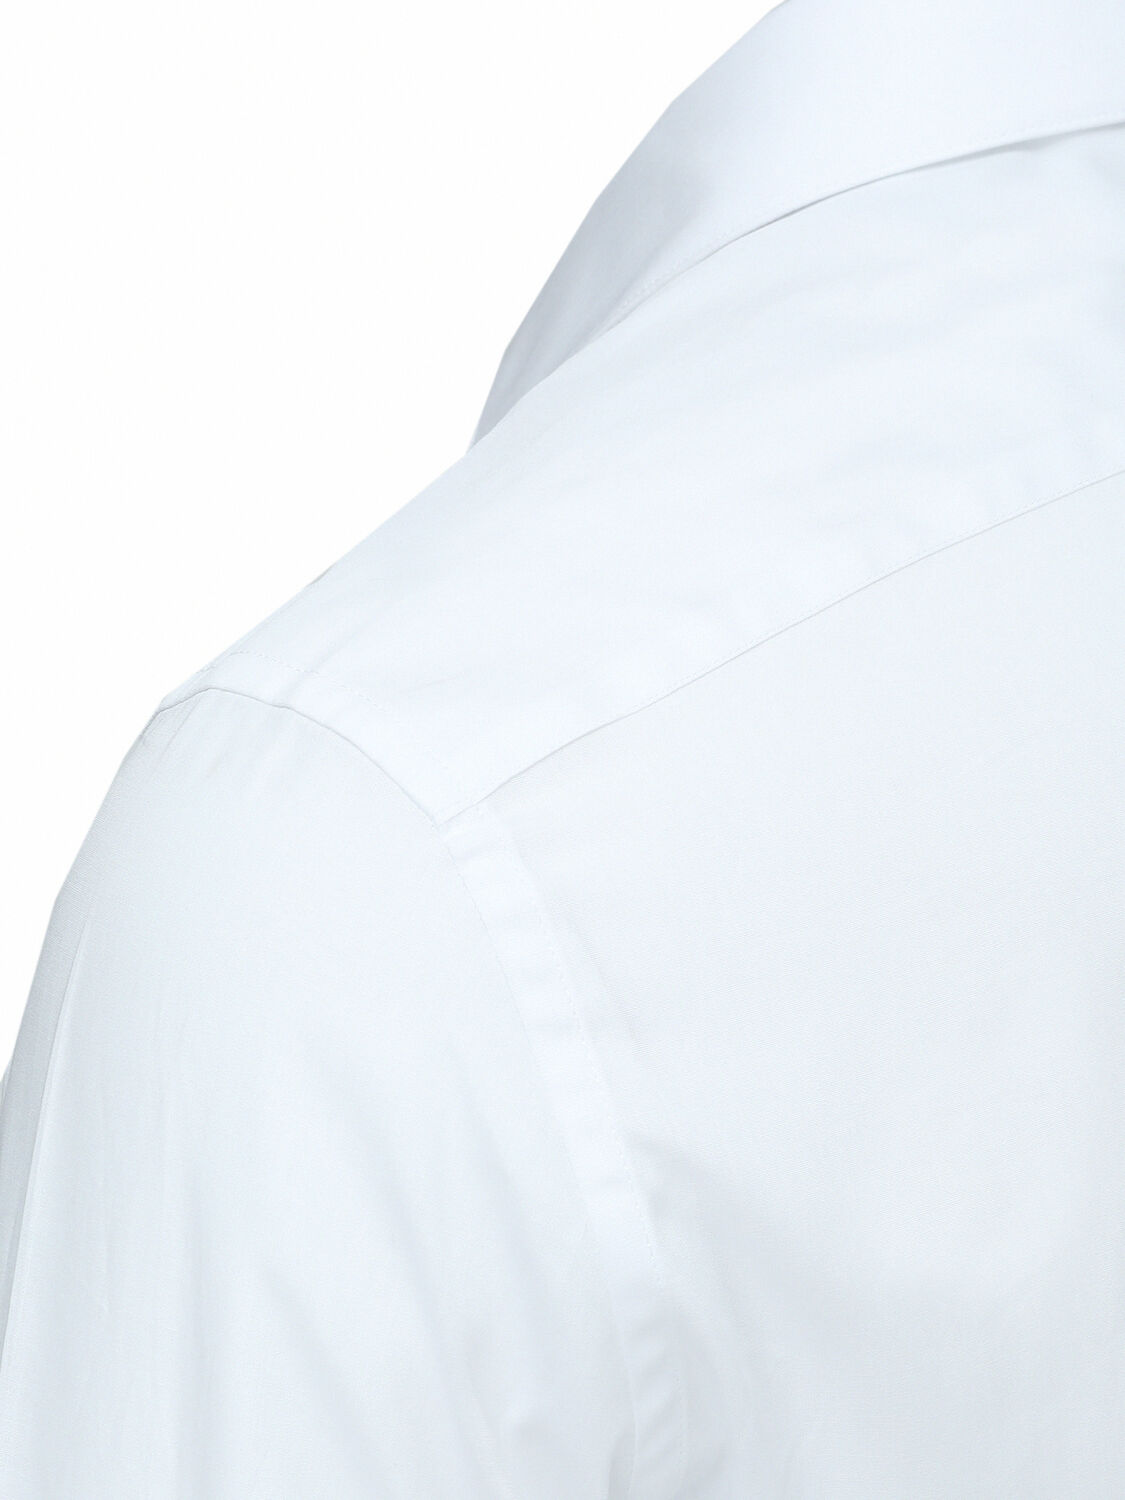 Beyaz Düz Slim Fit Duble Manşet Klasik Yaka Smokin Gömlek